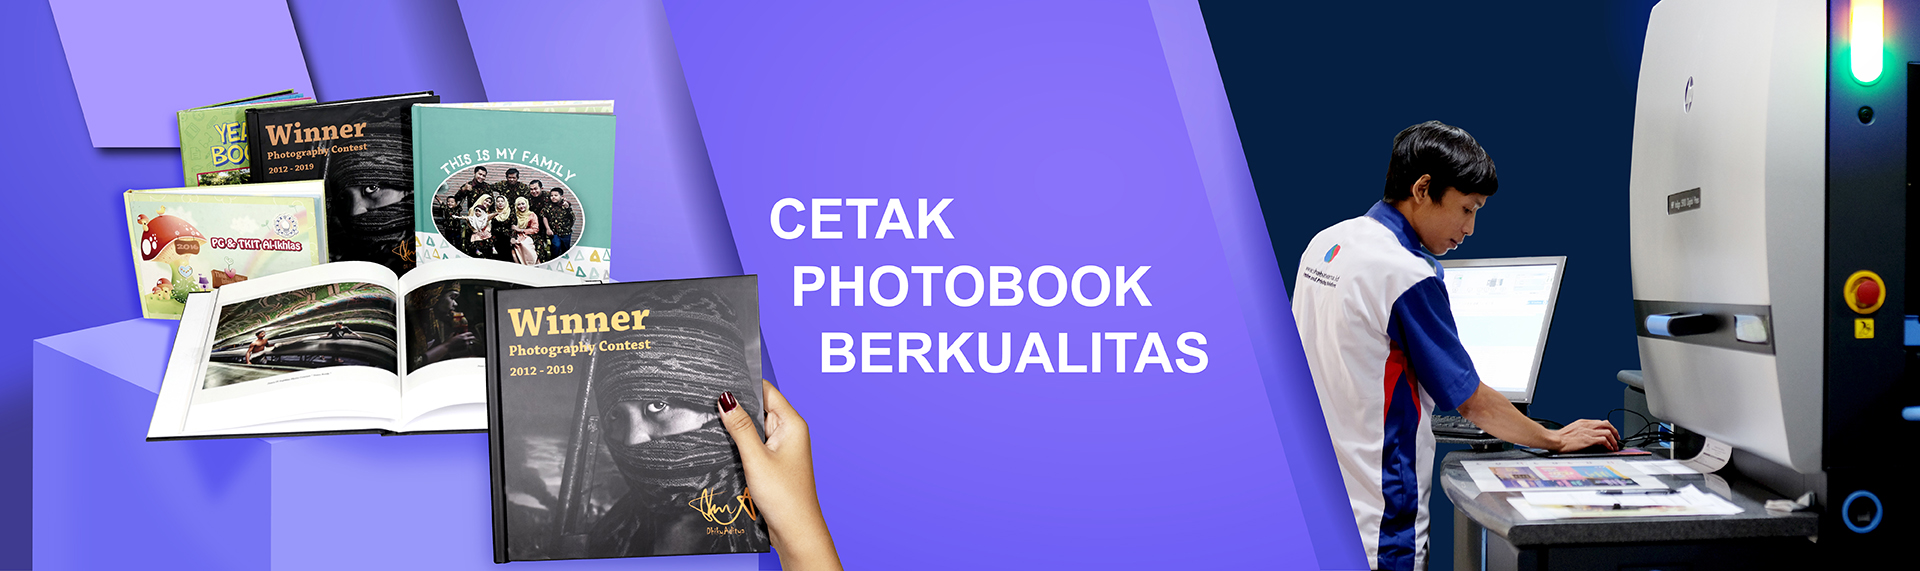 cetak photobook